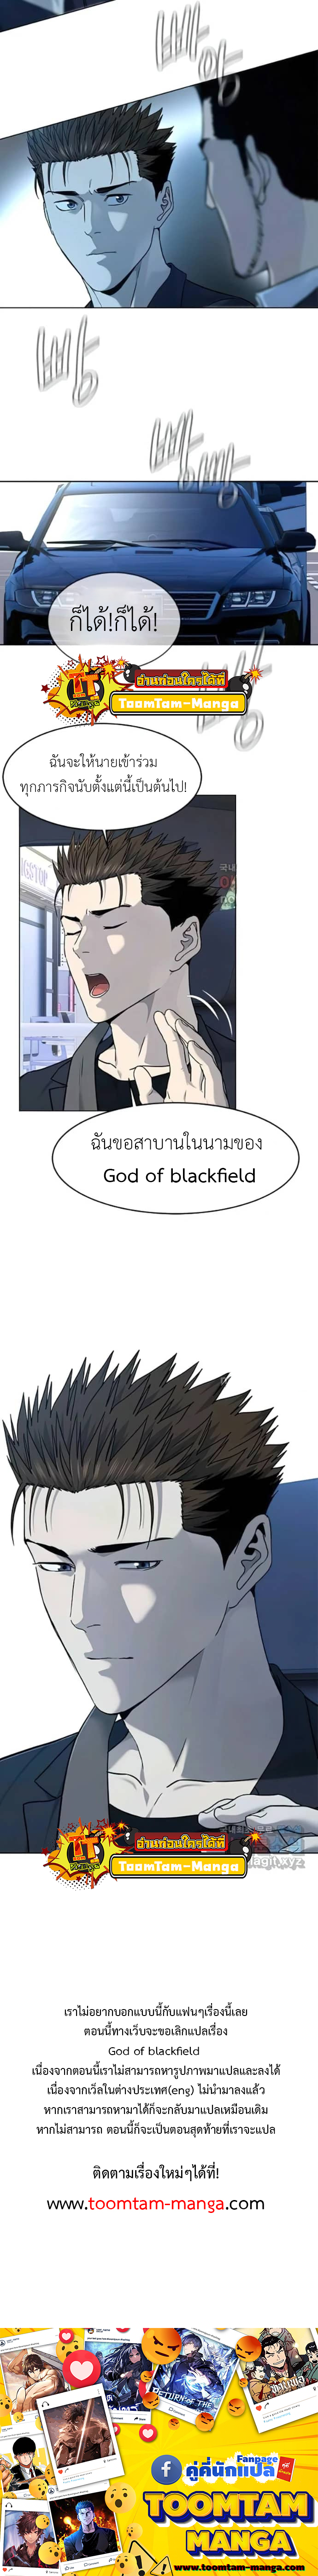 God of Blackfield 155 18 7 25660015